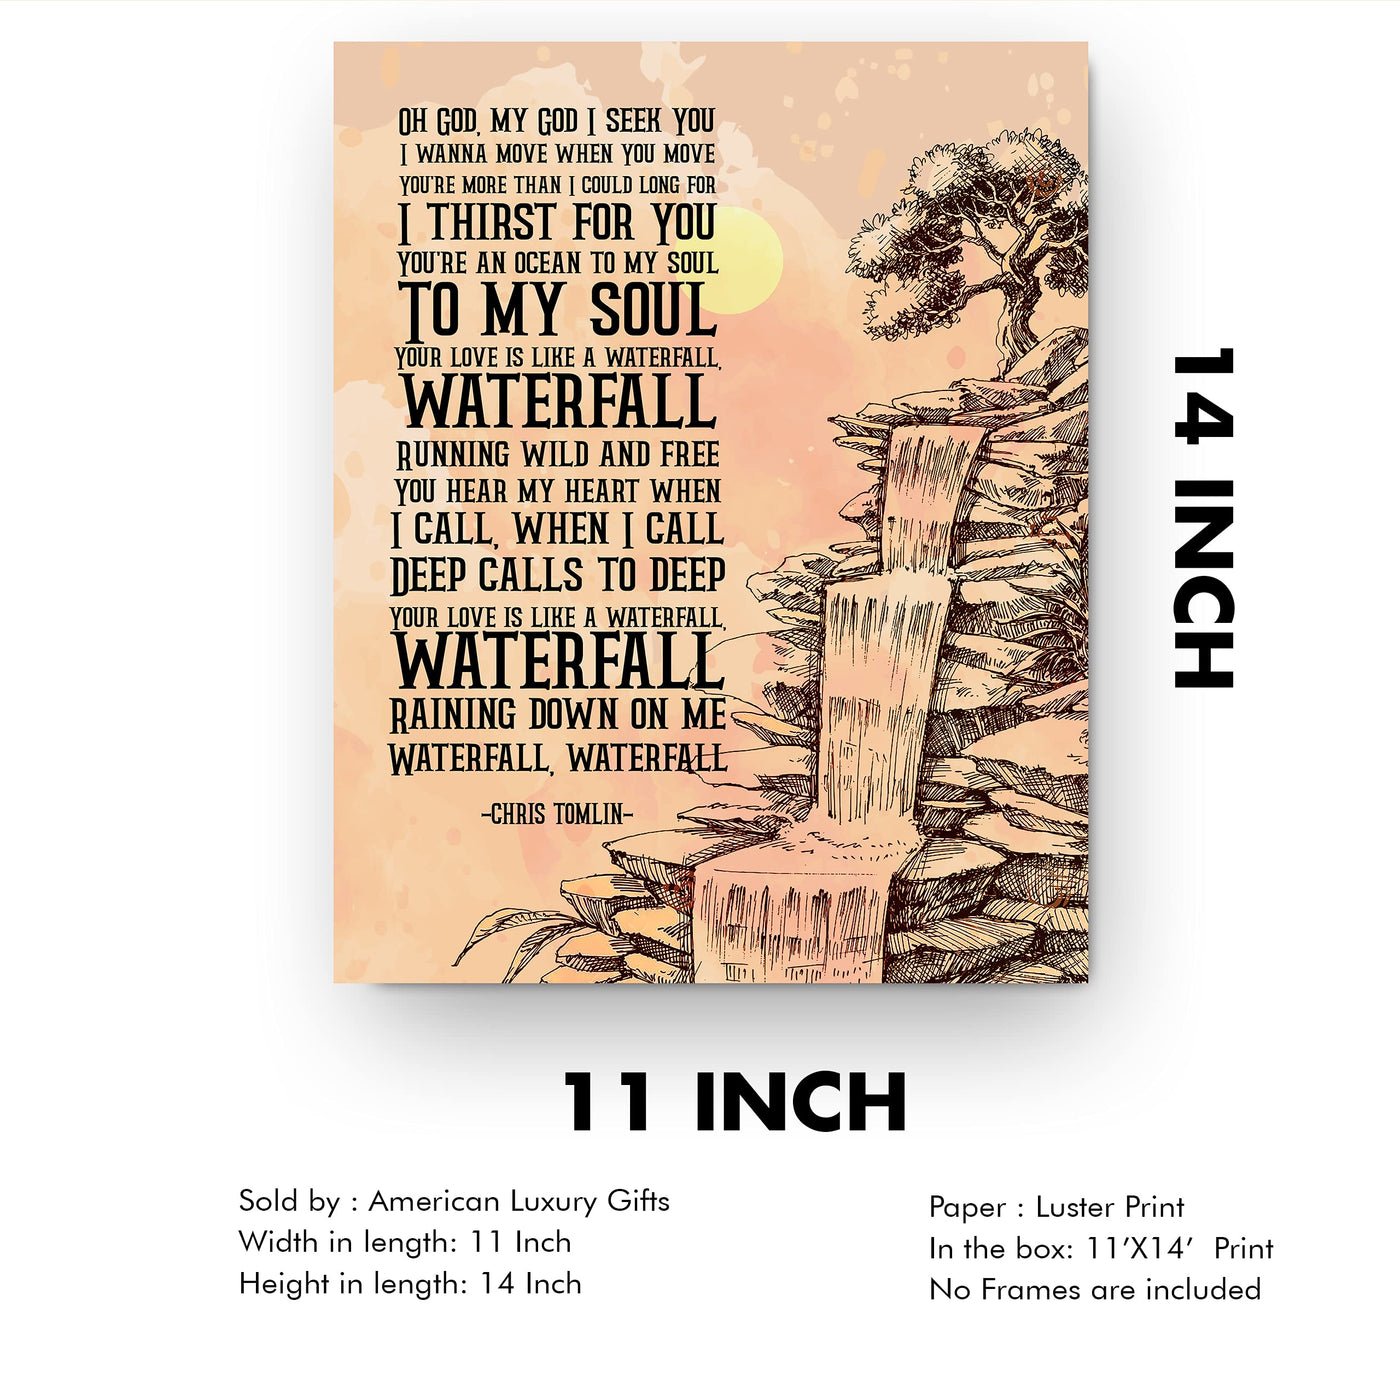 Chris Tomlin-"Waterfall" Song Lyrics Wall Art -11 x 14" Worship Music Poster Print -Ready to Frame. Inspirational Home-Office-Studio-Church-Dorm Decor. Perfect Gift for Christian Music Fans!